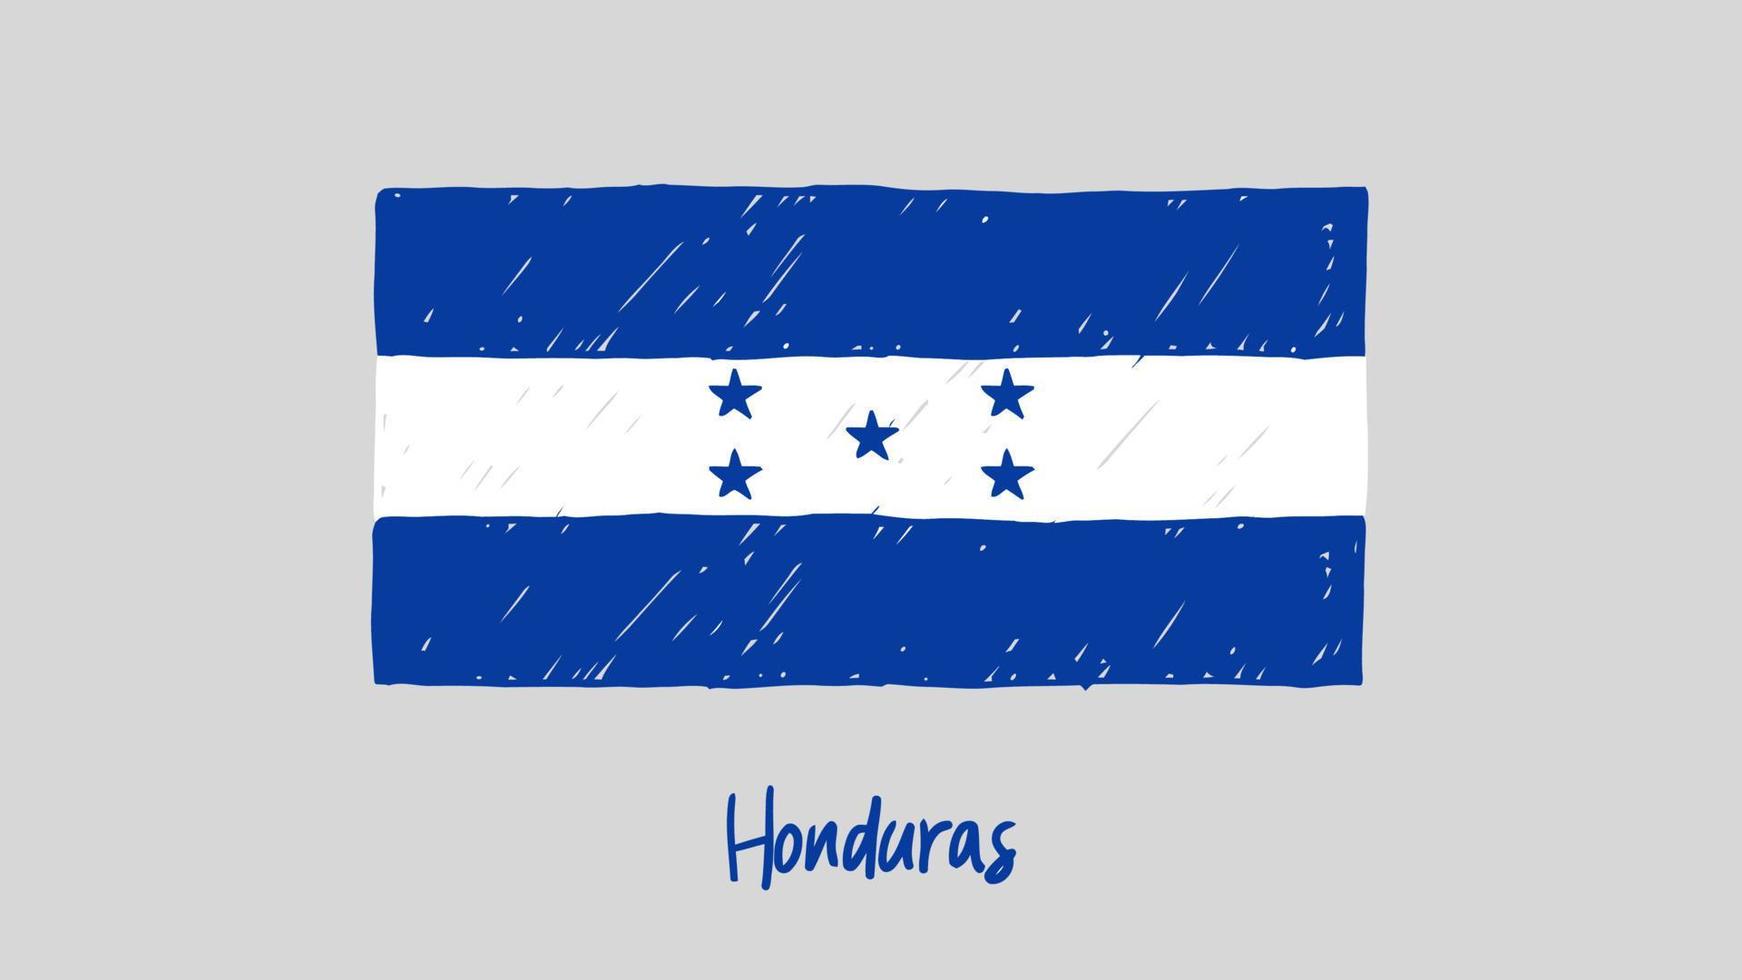 Honduras National Country Flag Marker or Pencil Sketch Illustration Vector